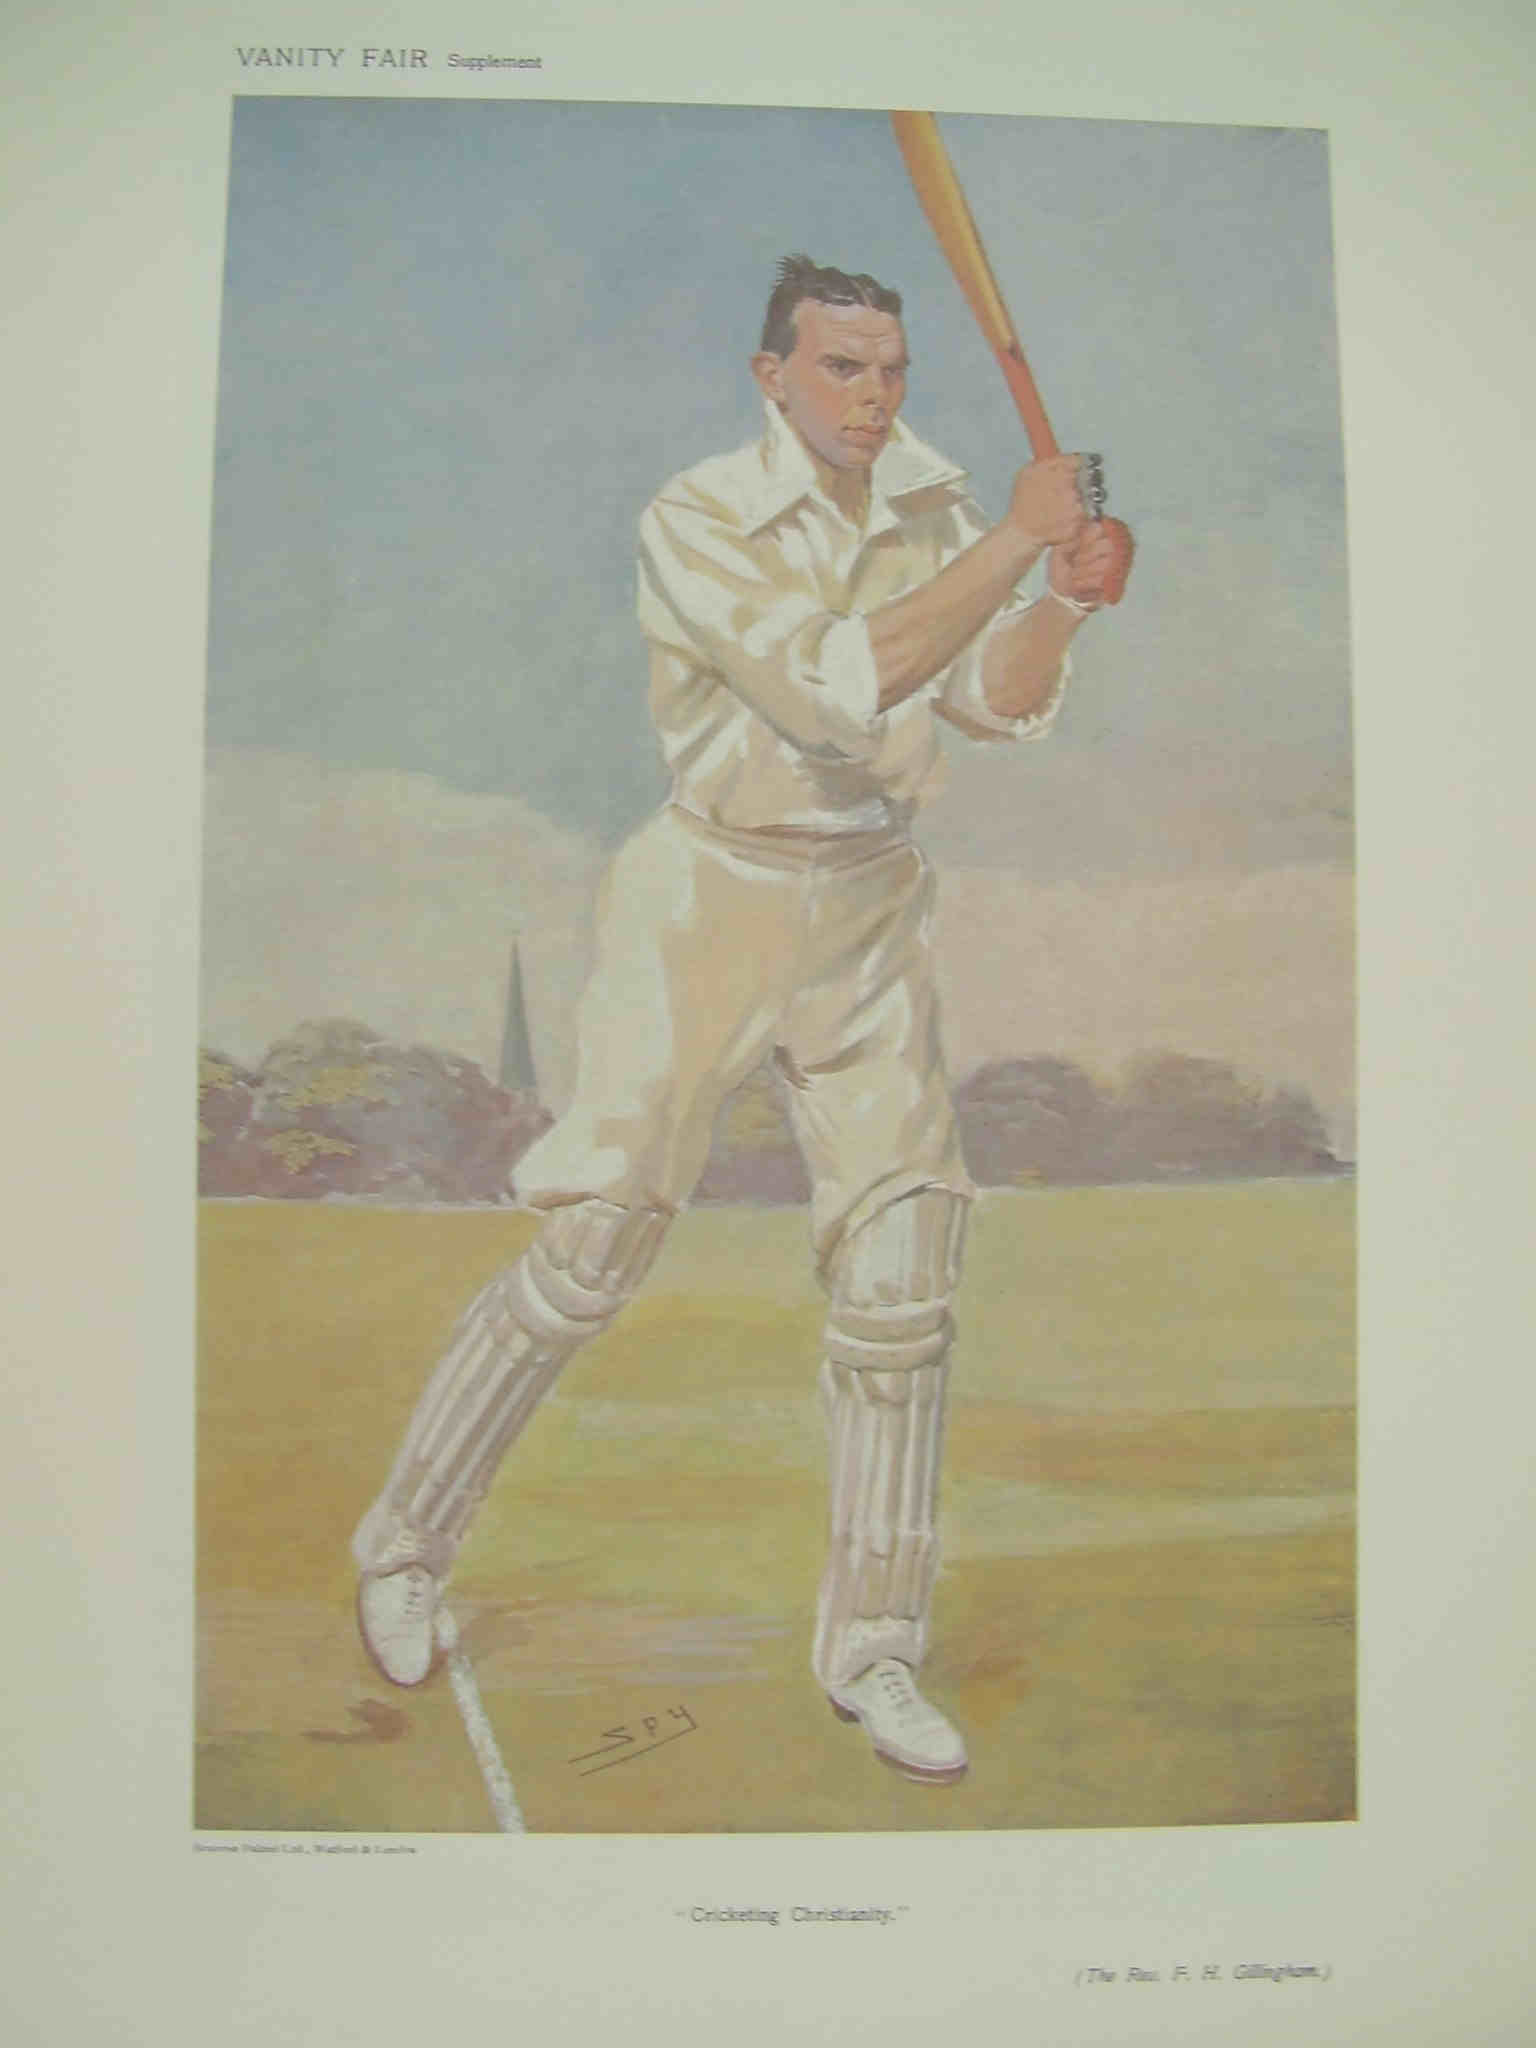 Vanity Fair Cricket Print. The Rev. F. H. Gillingham 